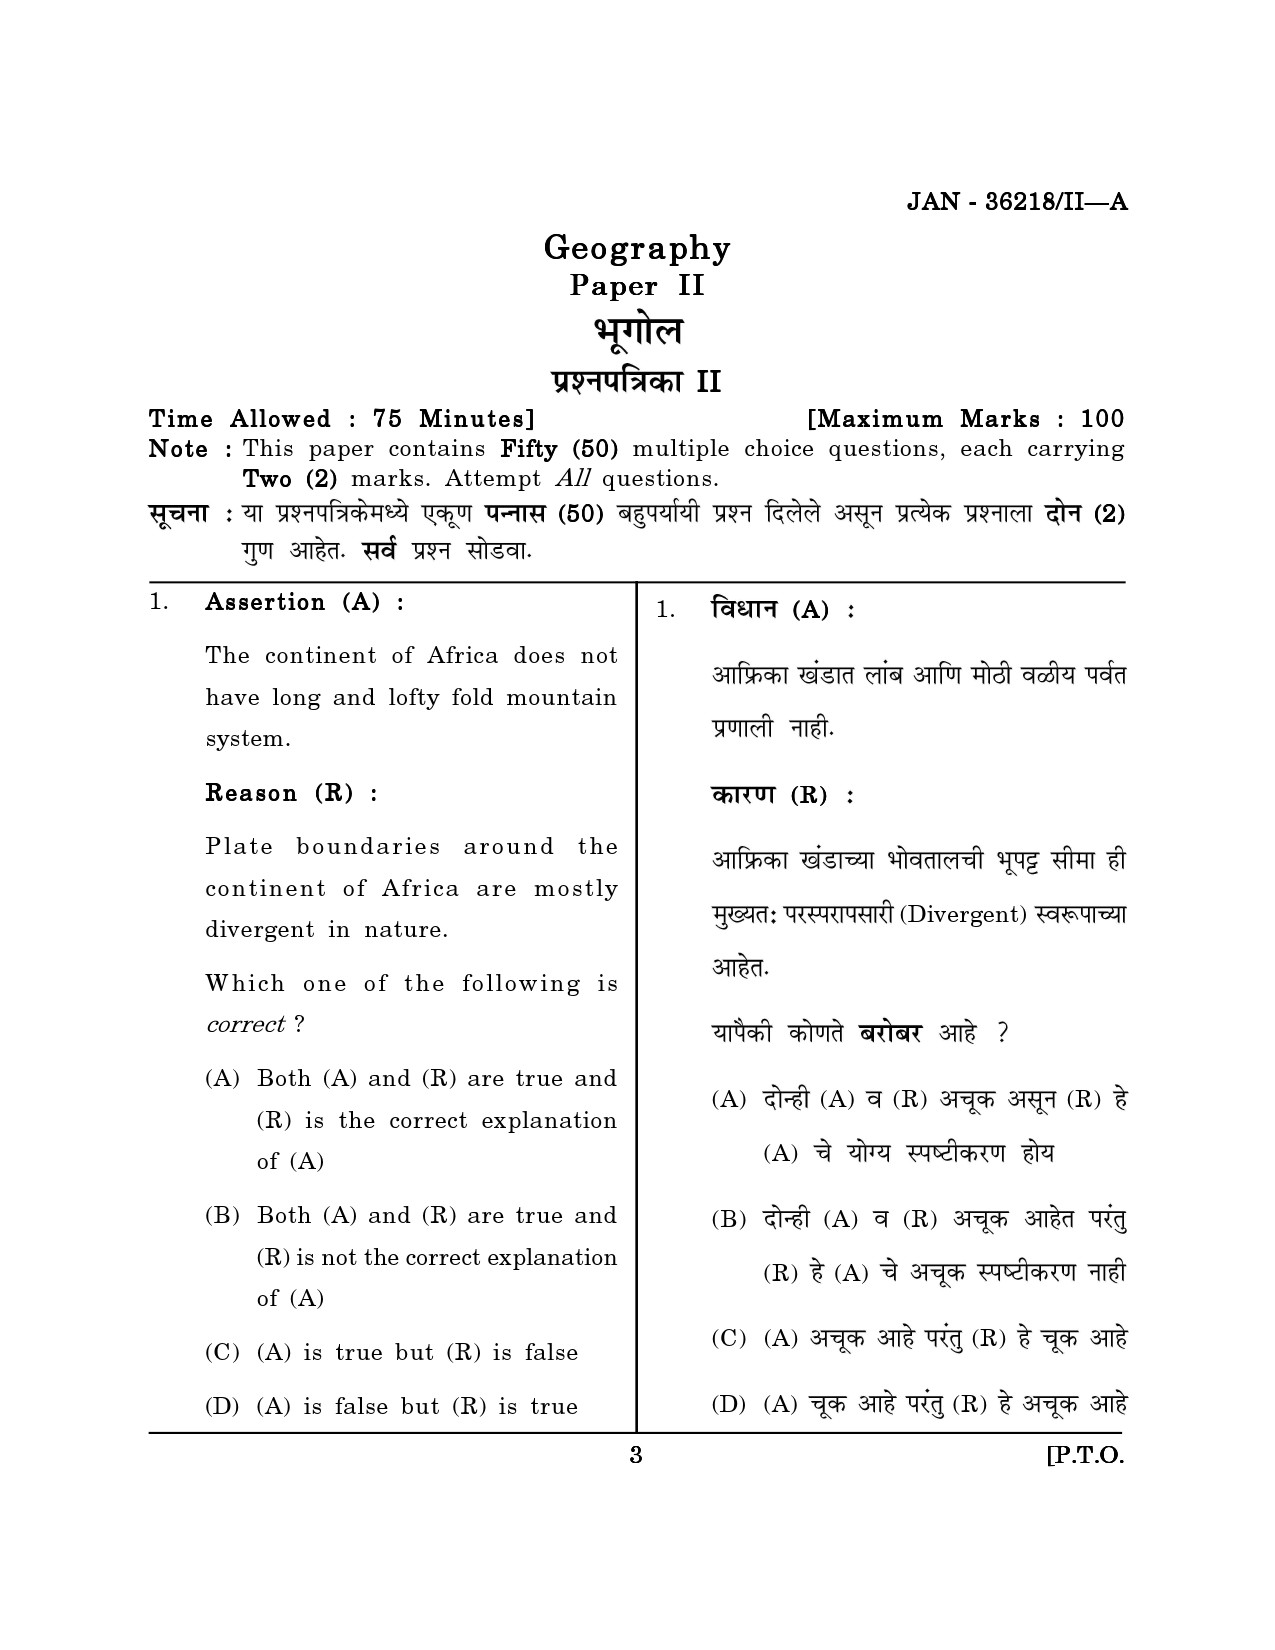 Maharashtra SET Geography Question Paper II January 2018 2